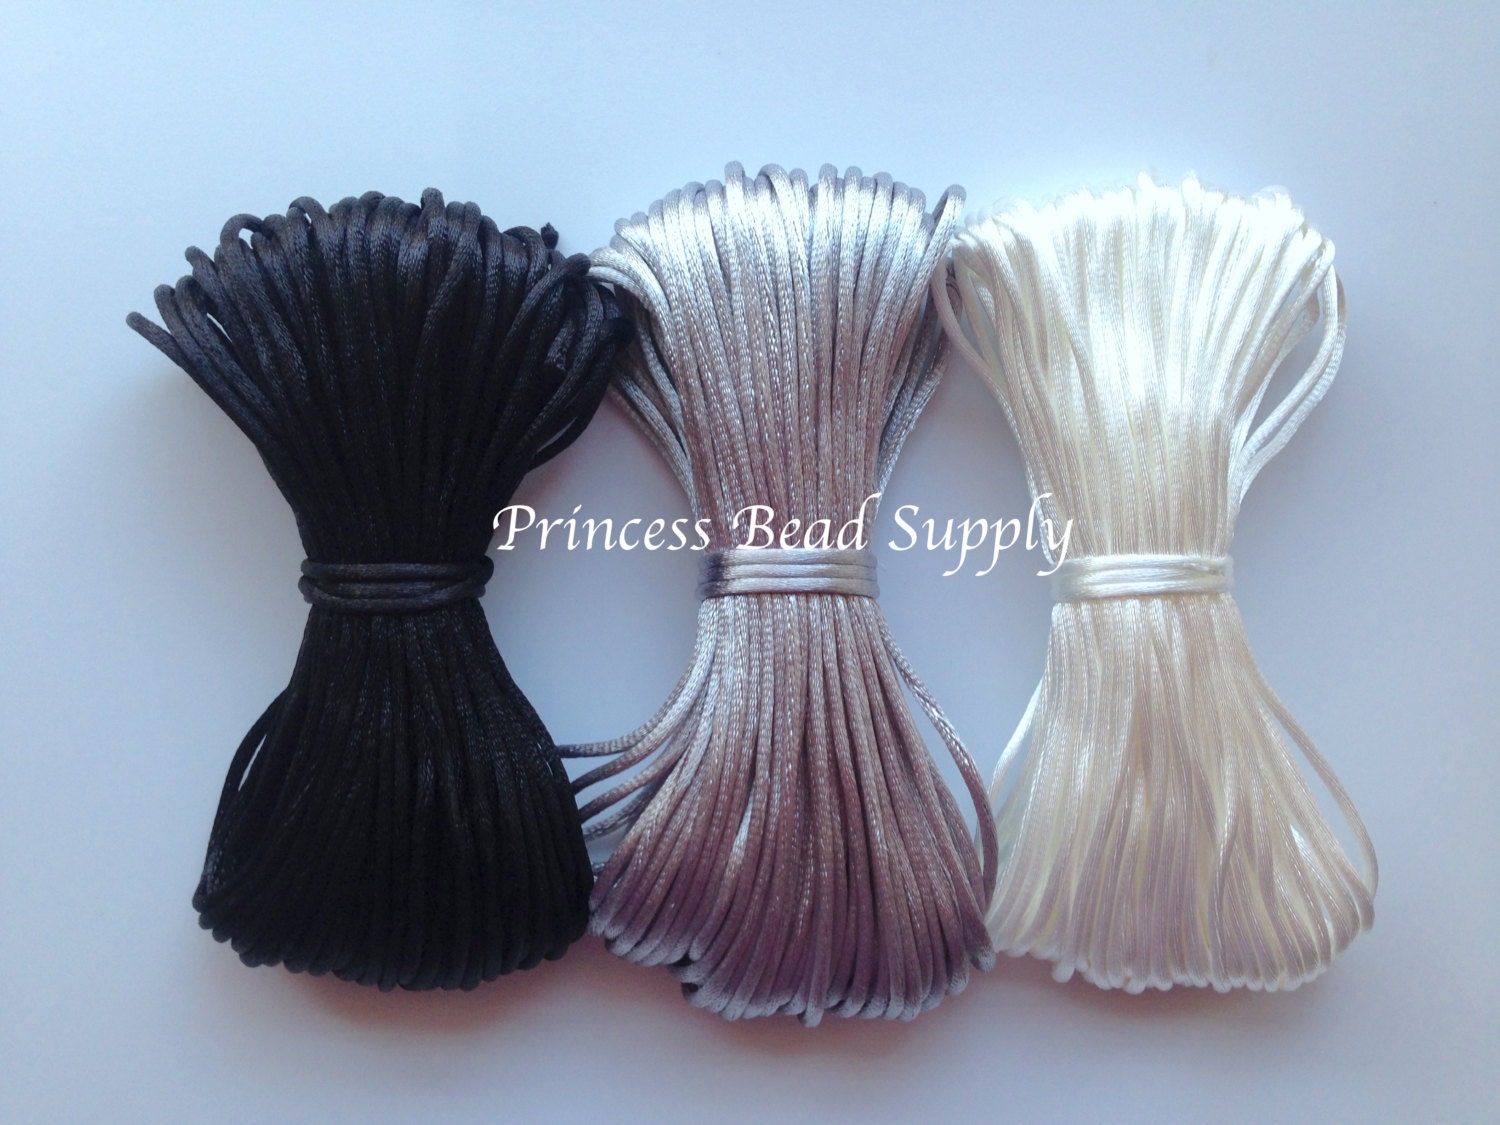 1.5mm Satin Nylon Cord & Break-Away Clasps – USA Silicone Bead Supply  Princess Bead Supply